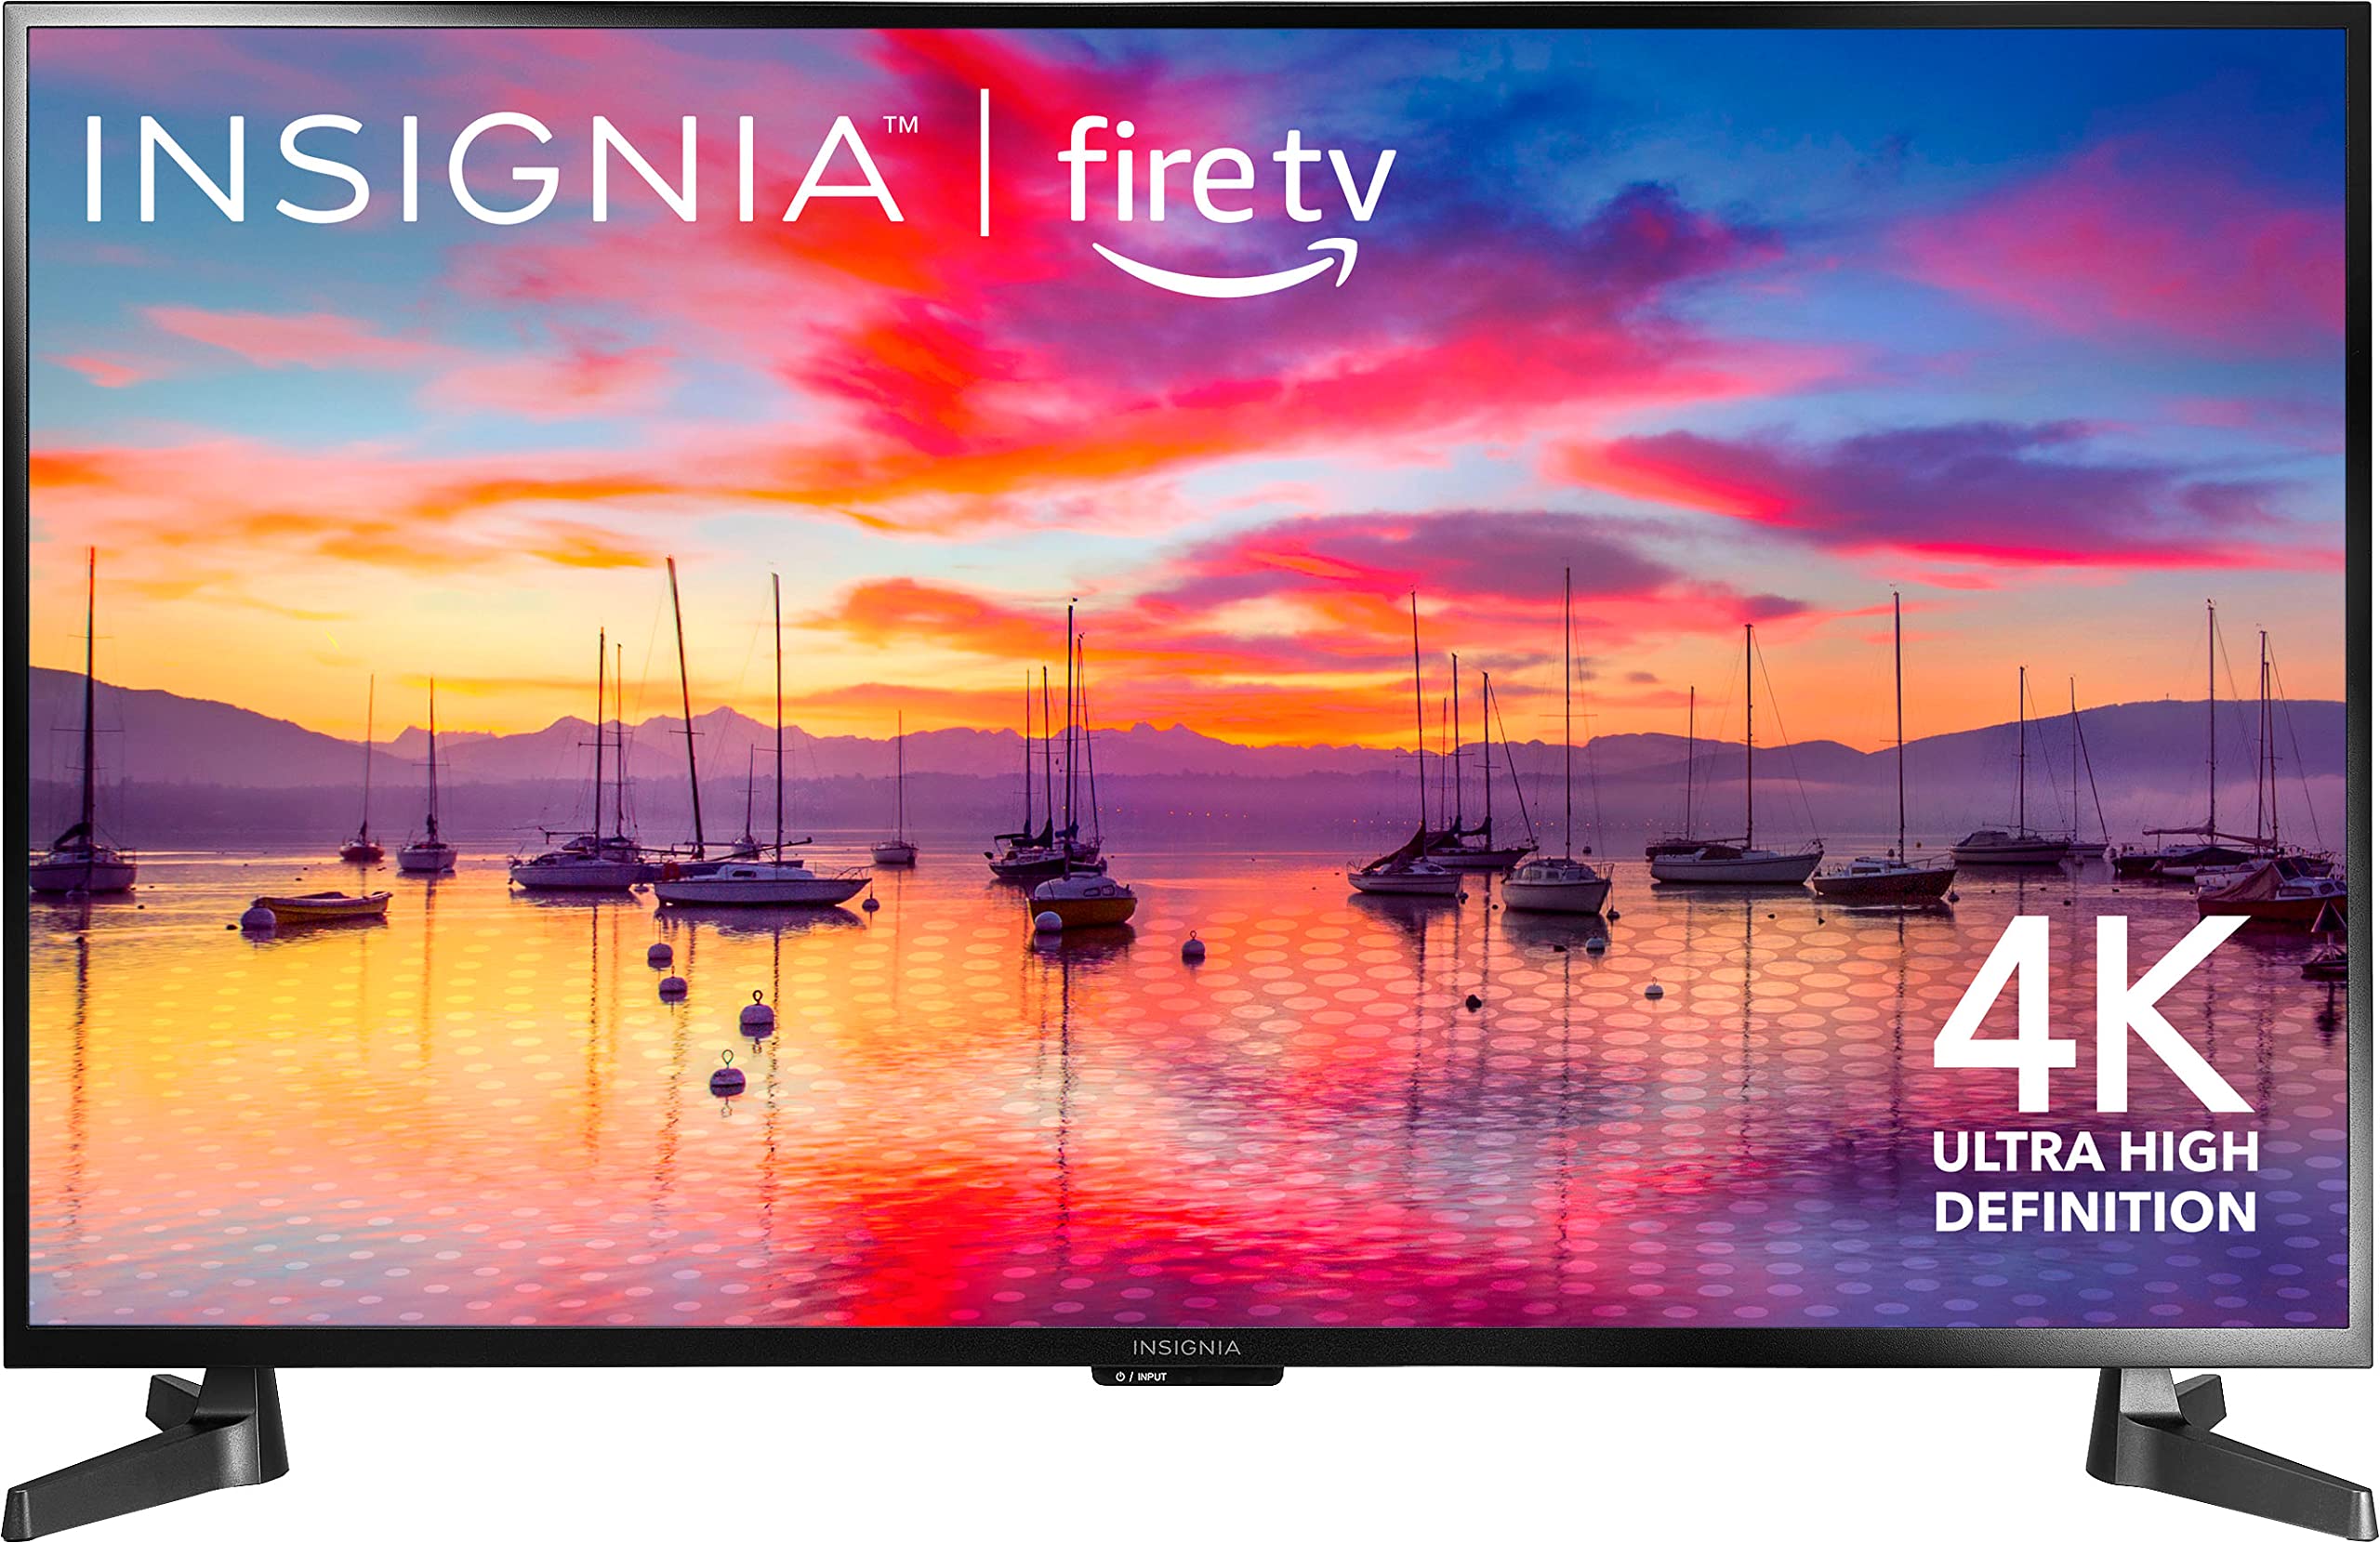 43" Insignia Class F30 Series LED 4K UHD Smart Fire TV $189.99 + Free Shipping